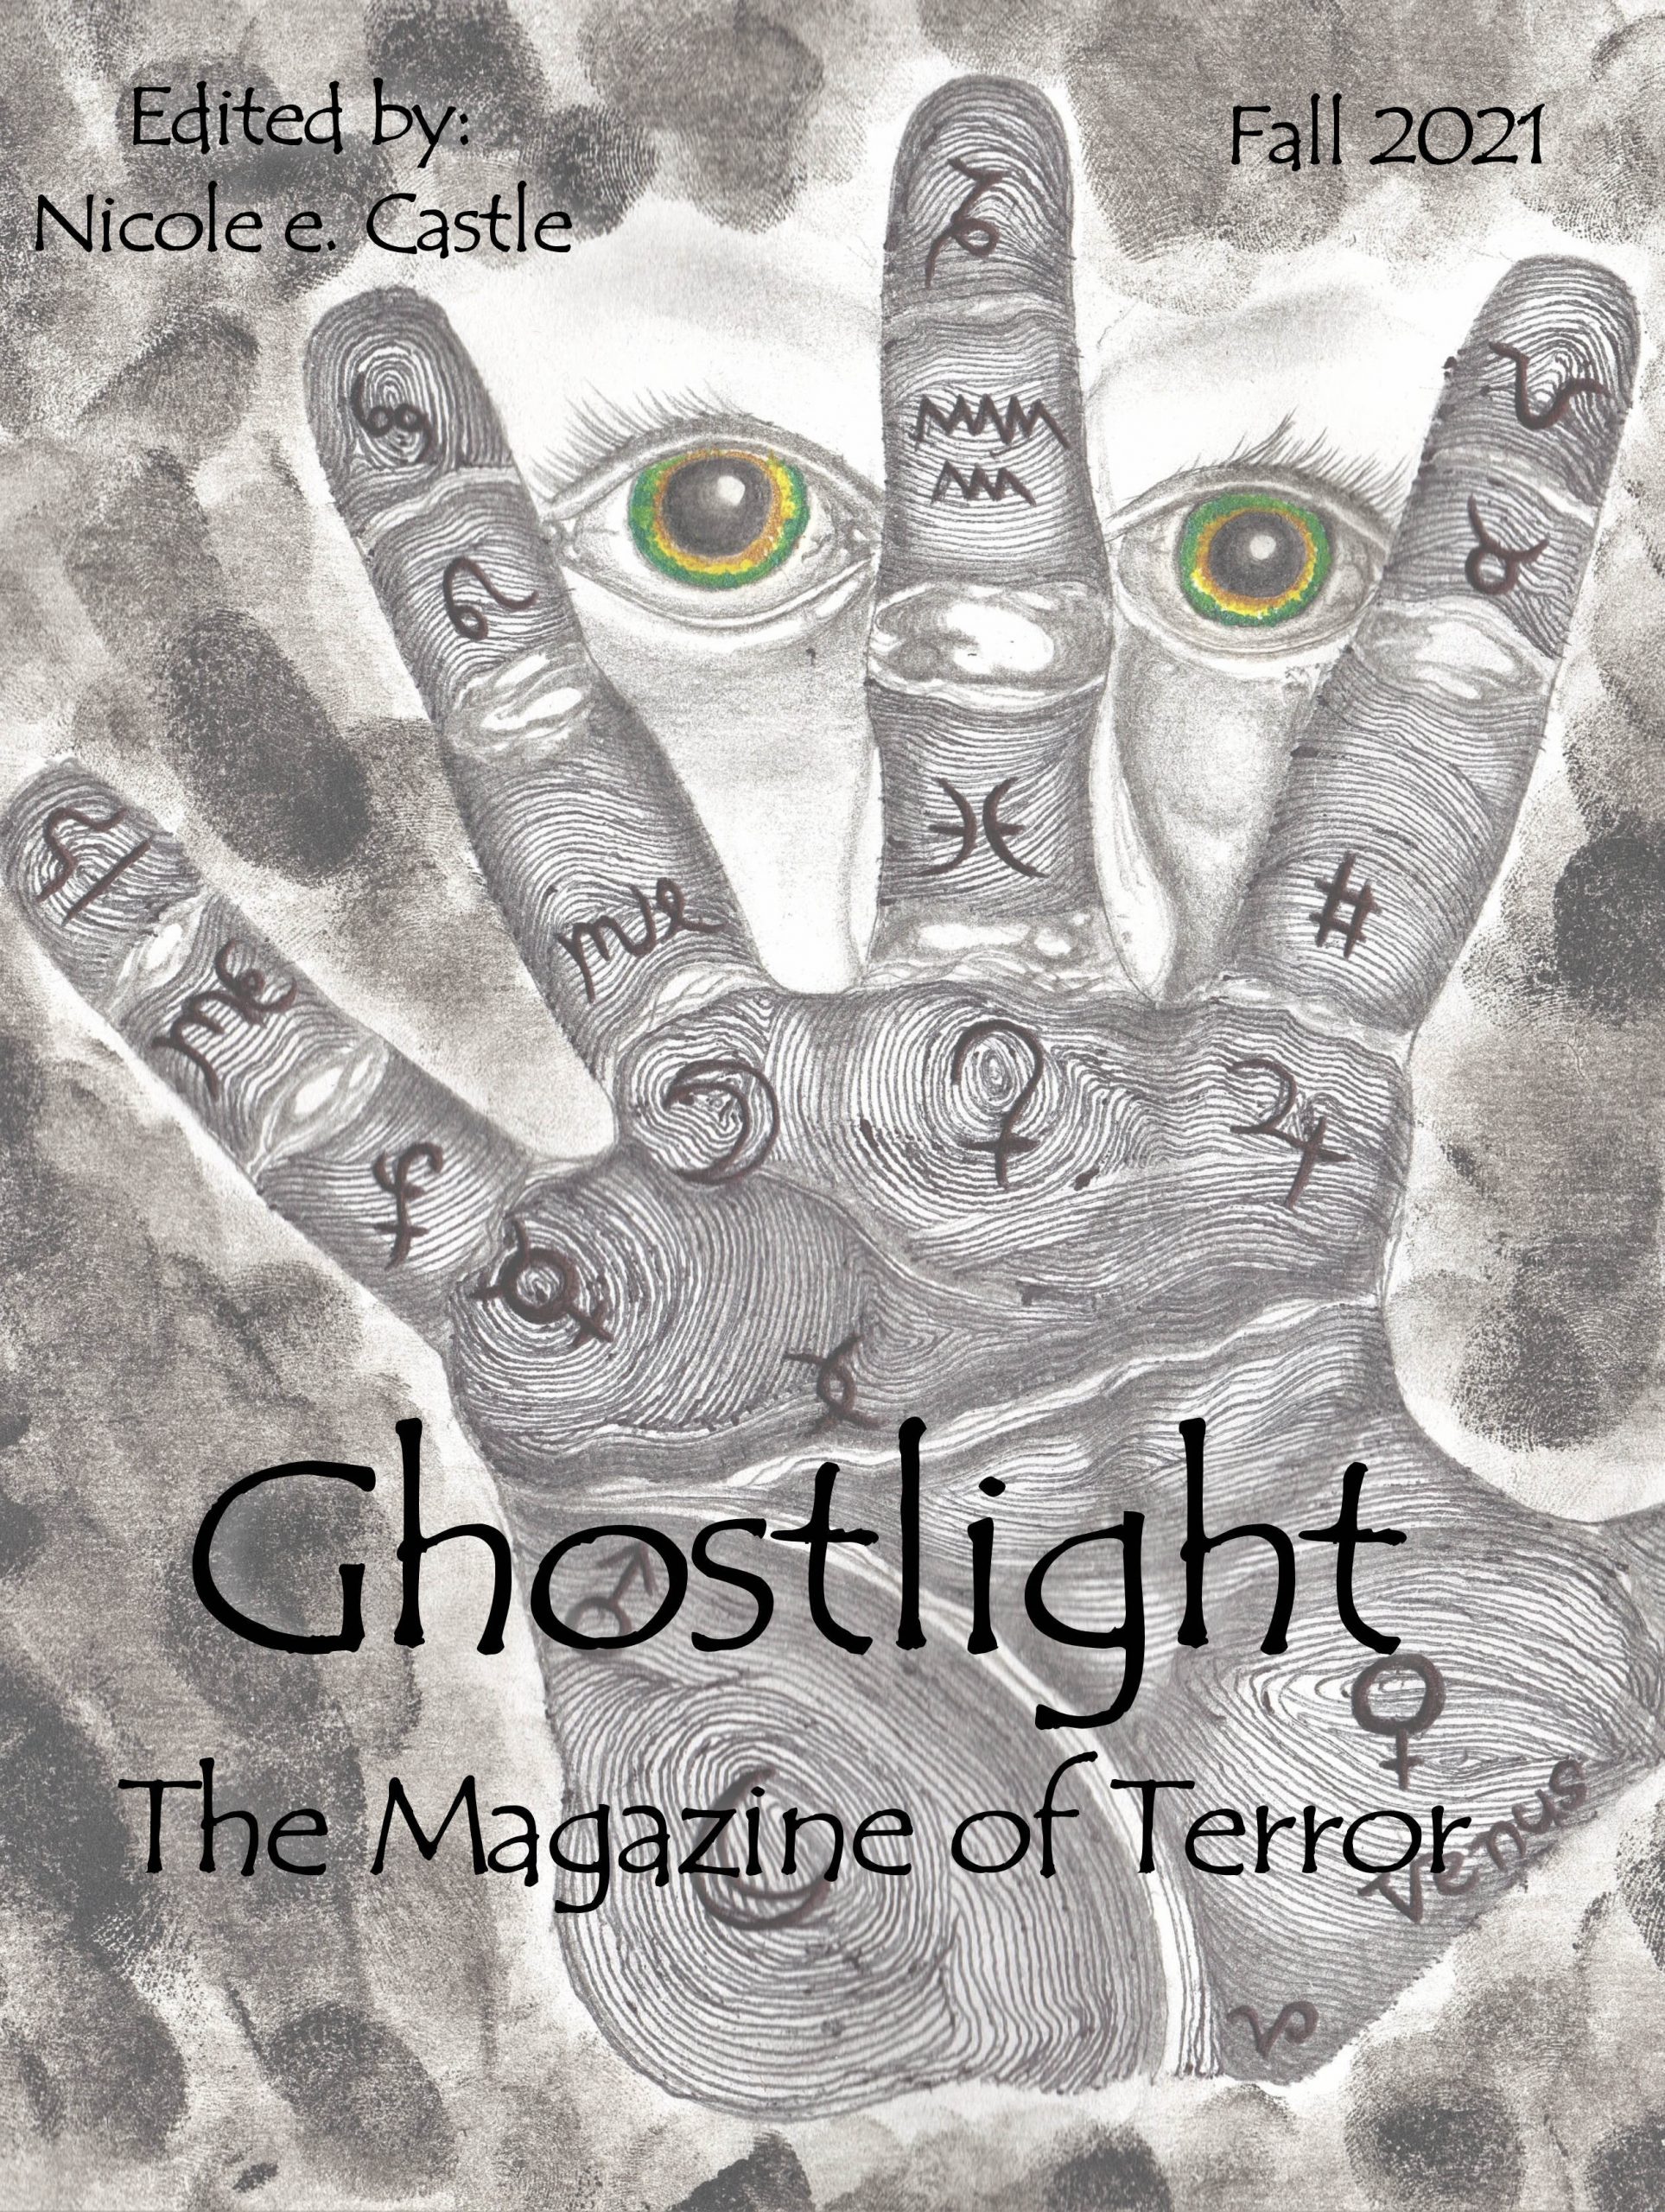 GHOSTLIGHT, THE MAGAZINE OF TERROR: FALL 2021 (#7)